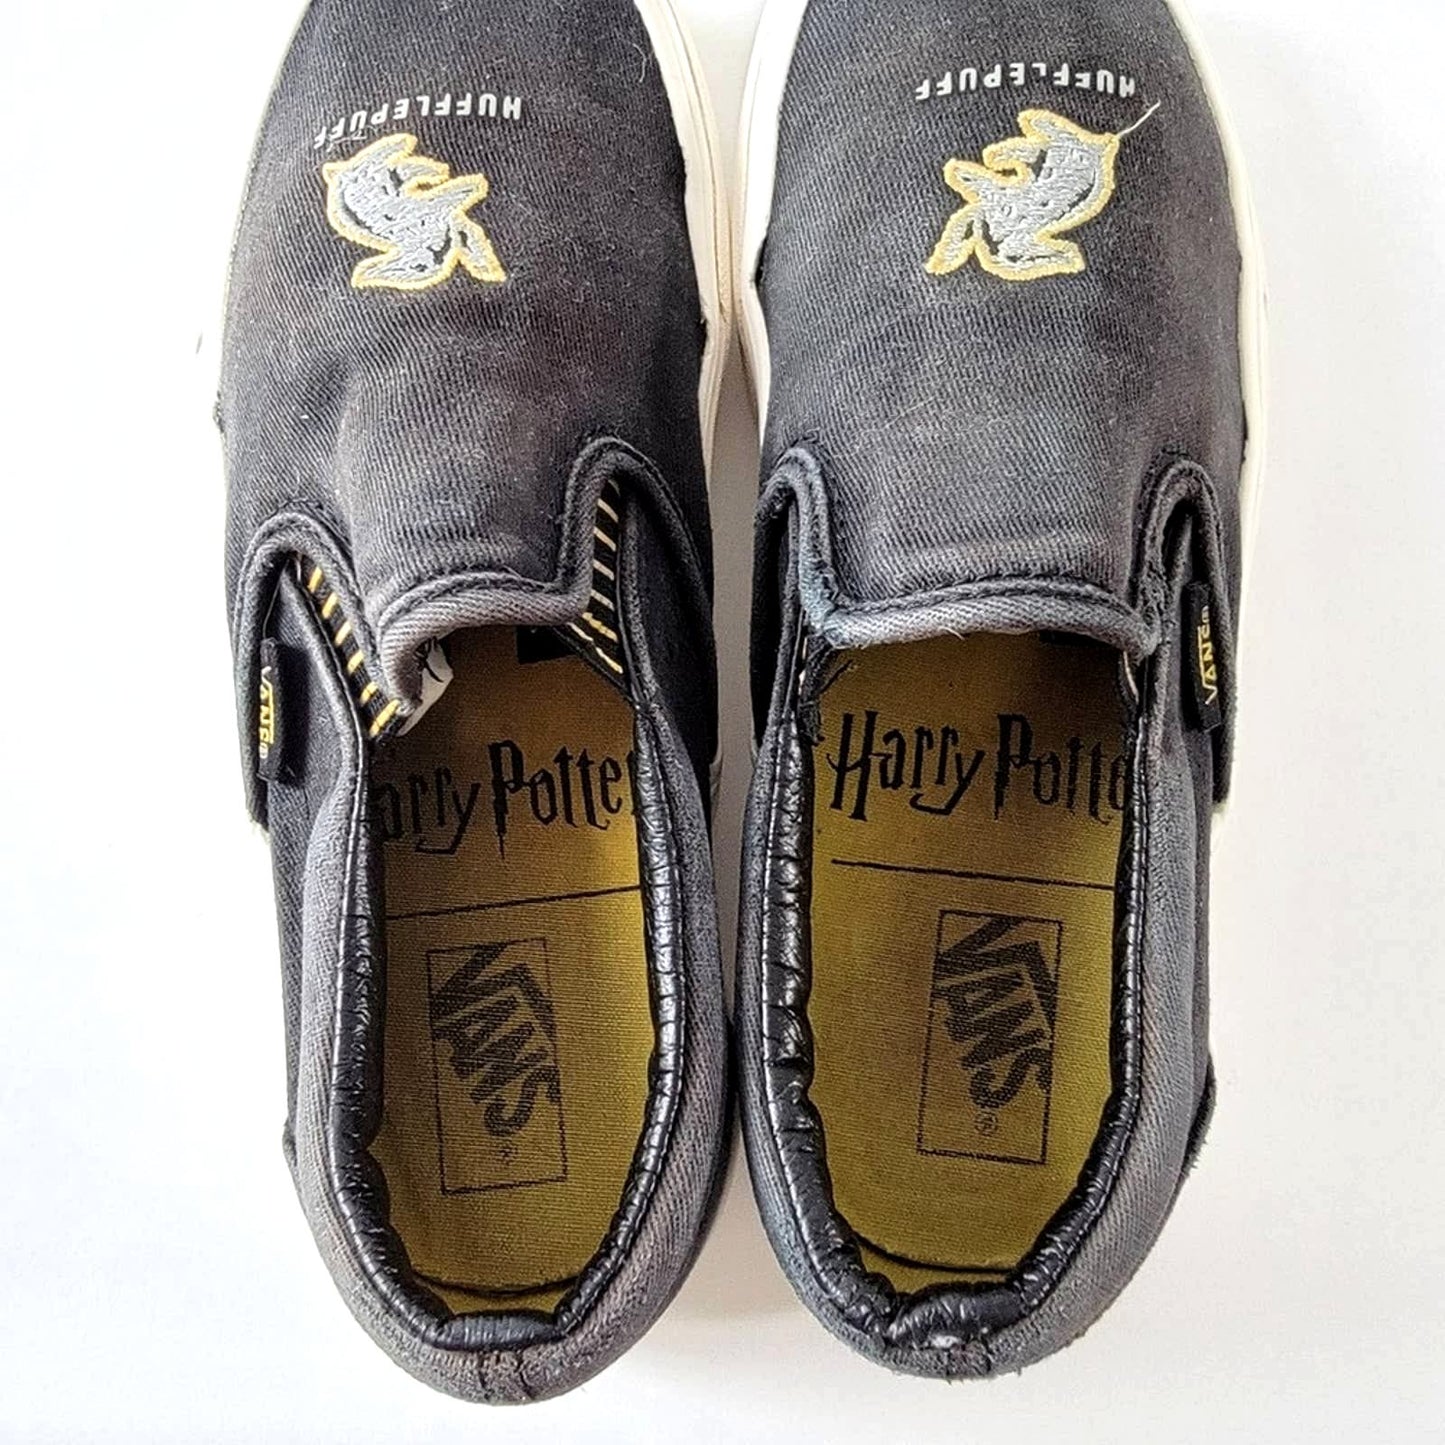 Vans Slip On x Harry Potter HufflePuff Sneakers - 5.5